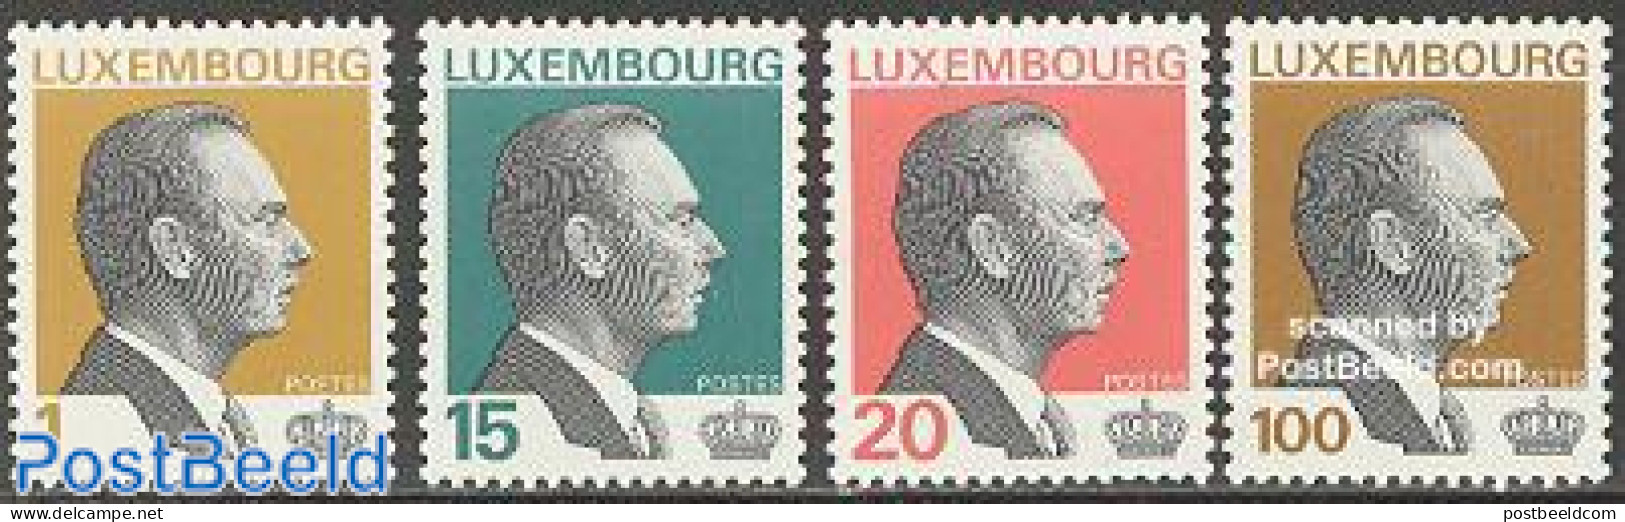 Luxemburg 1994 Definitives 4v, Mint NH - Neufs